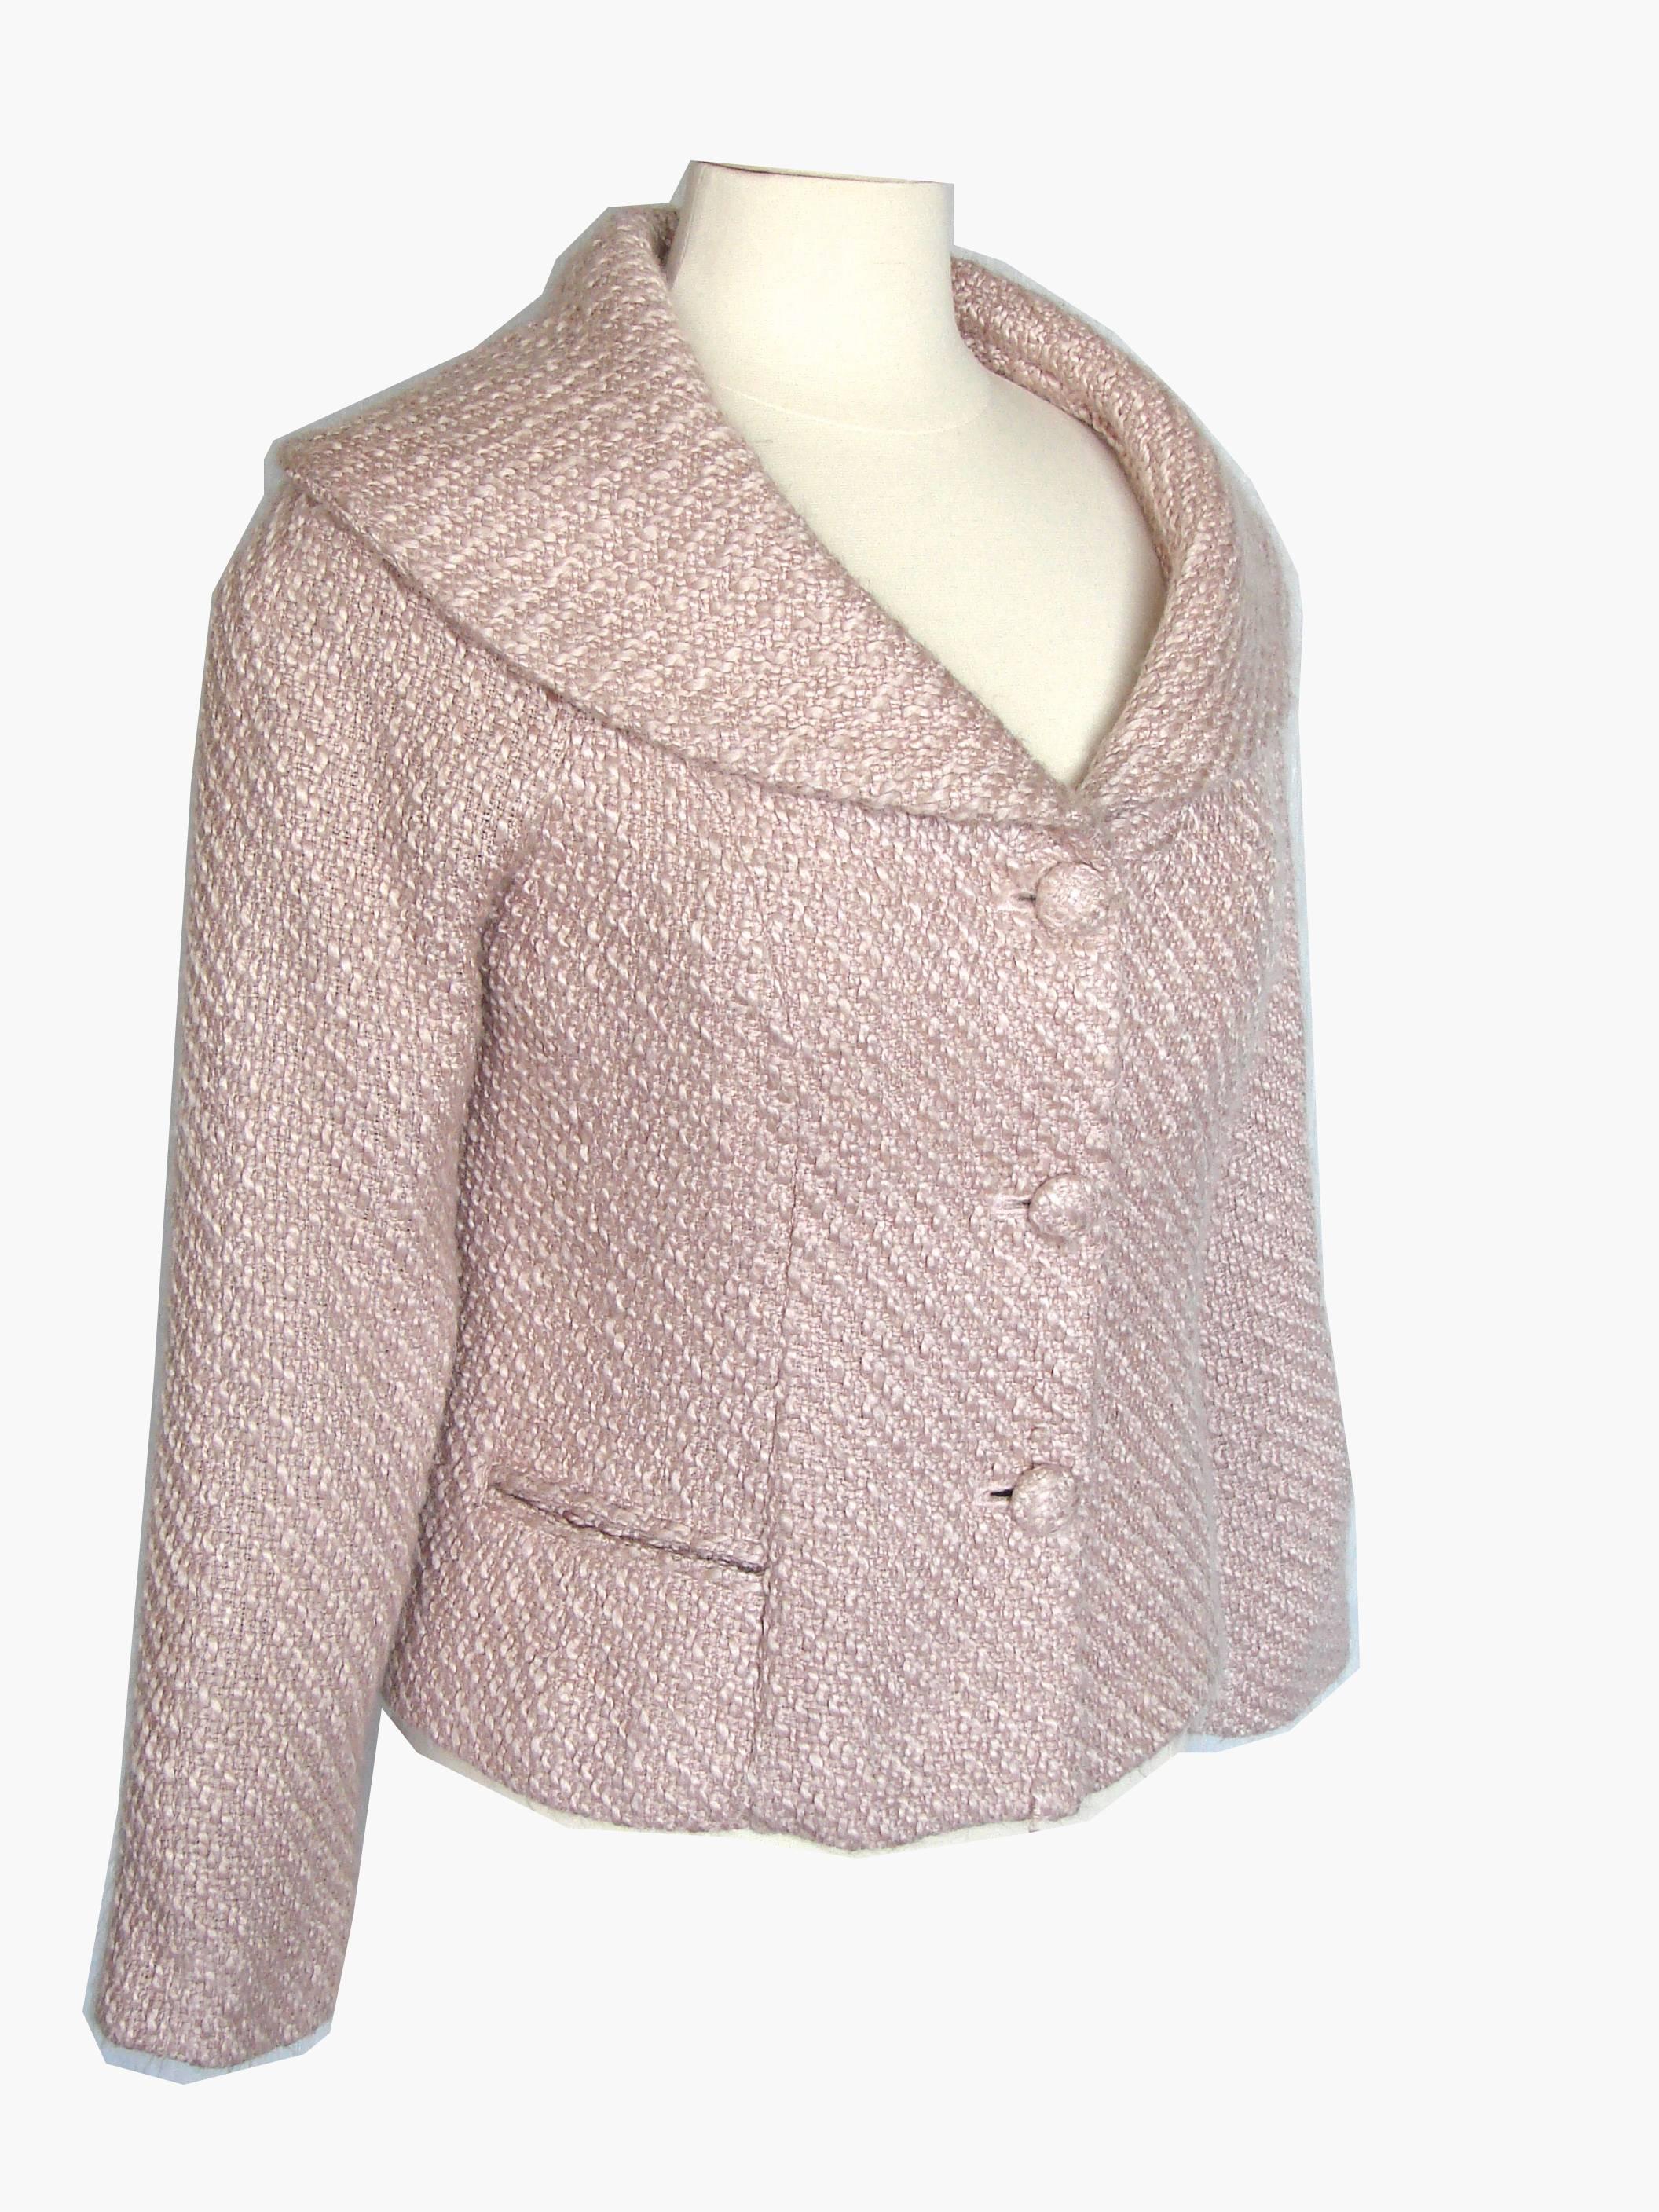 Beige Pierre Cardin Pale Pink Knit Jacket with Shawl Collar 1980s Size 8